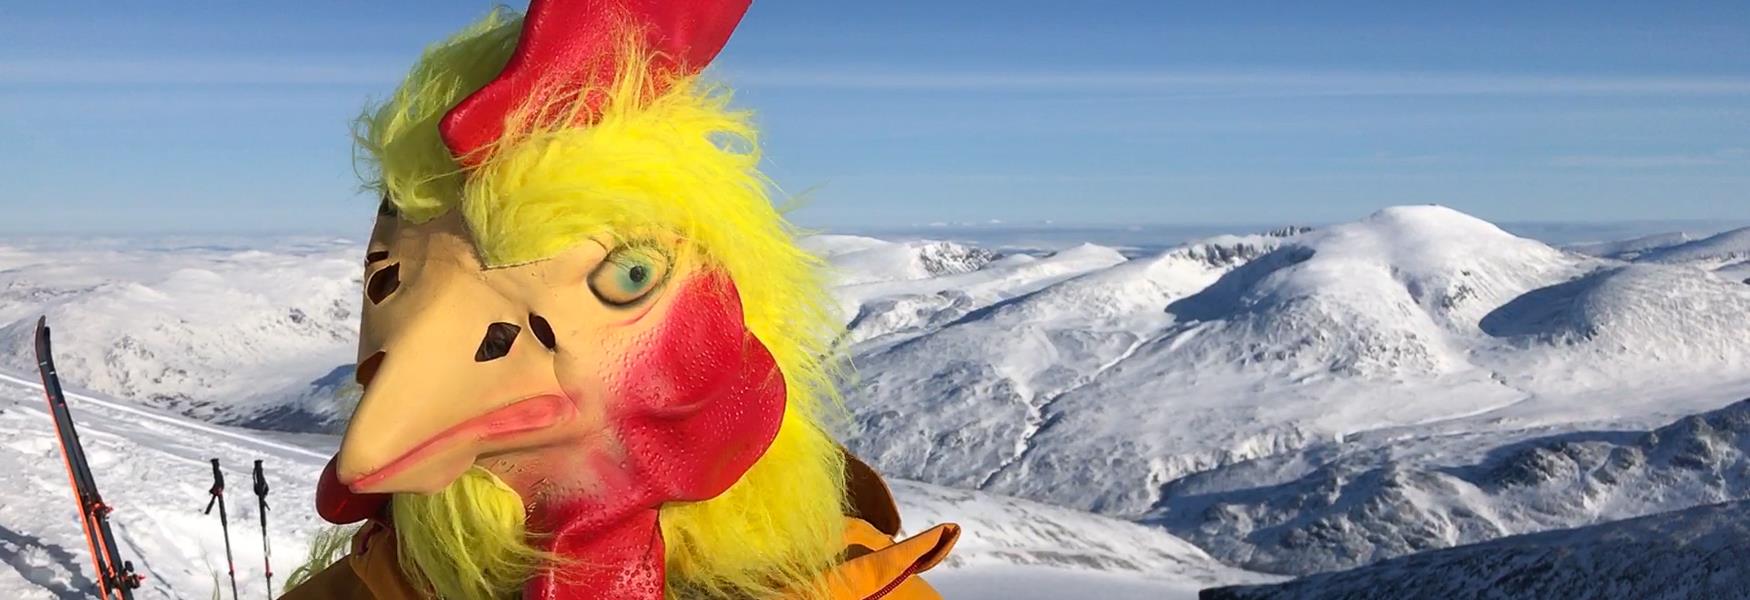 Påskekylling på Galdhøpiggen i februar 2019. Kyllingdrakt. Kylling på ski i strålande sol med vakre fjell. Foto: Thomas Gundersen, Visit Jotunheimen, Galdhøpiggen, topptur